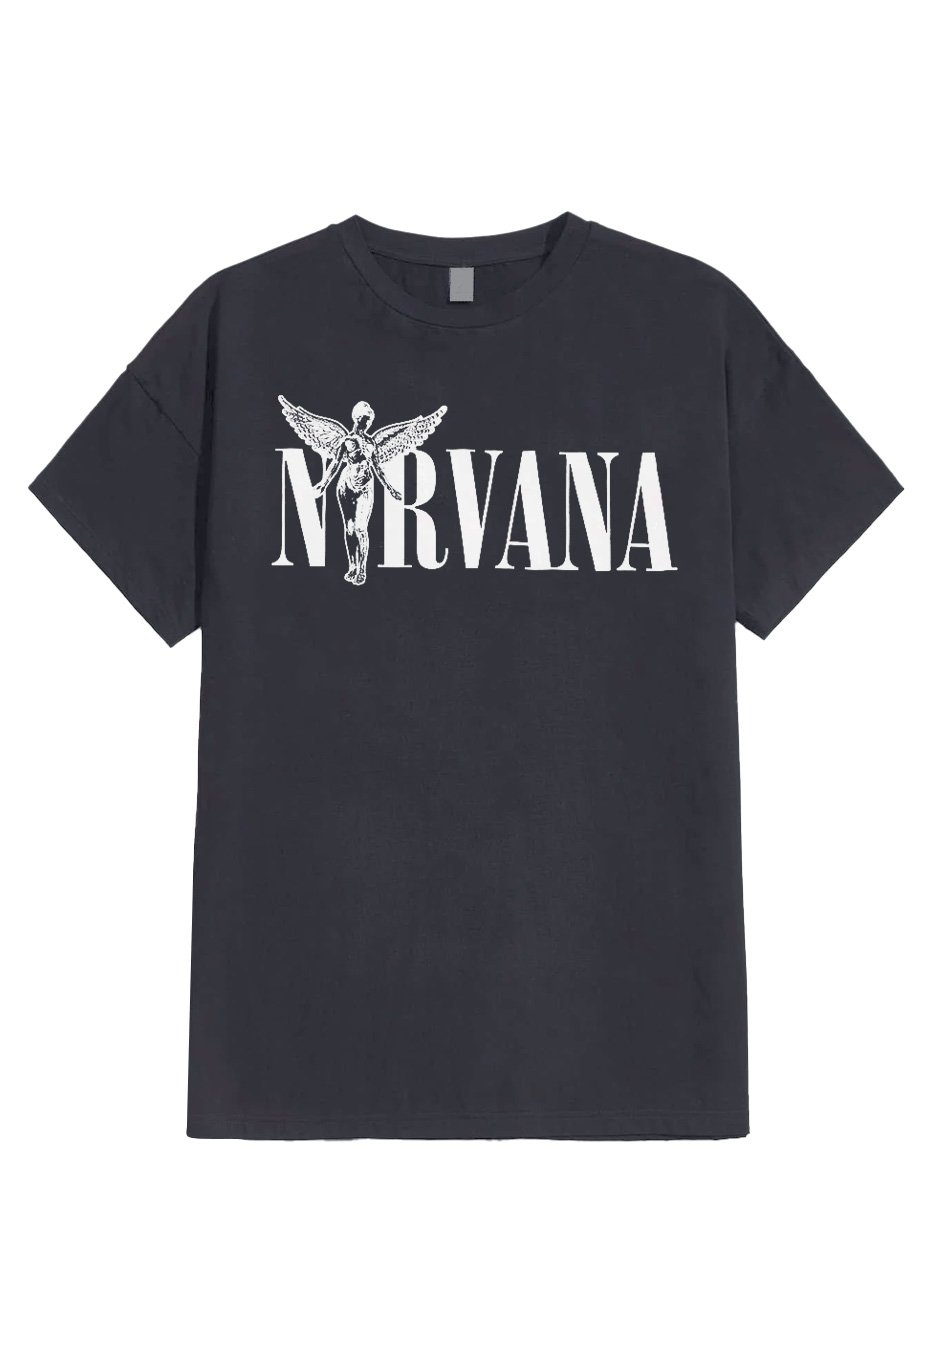 Nirvana - In Utero 2 Charcoal - T-Shirt